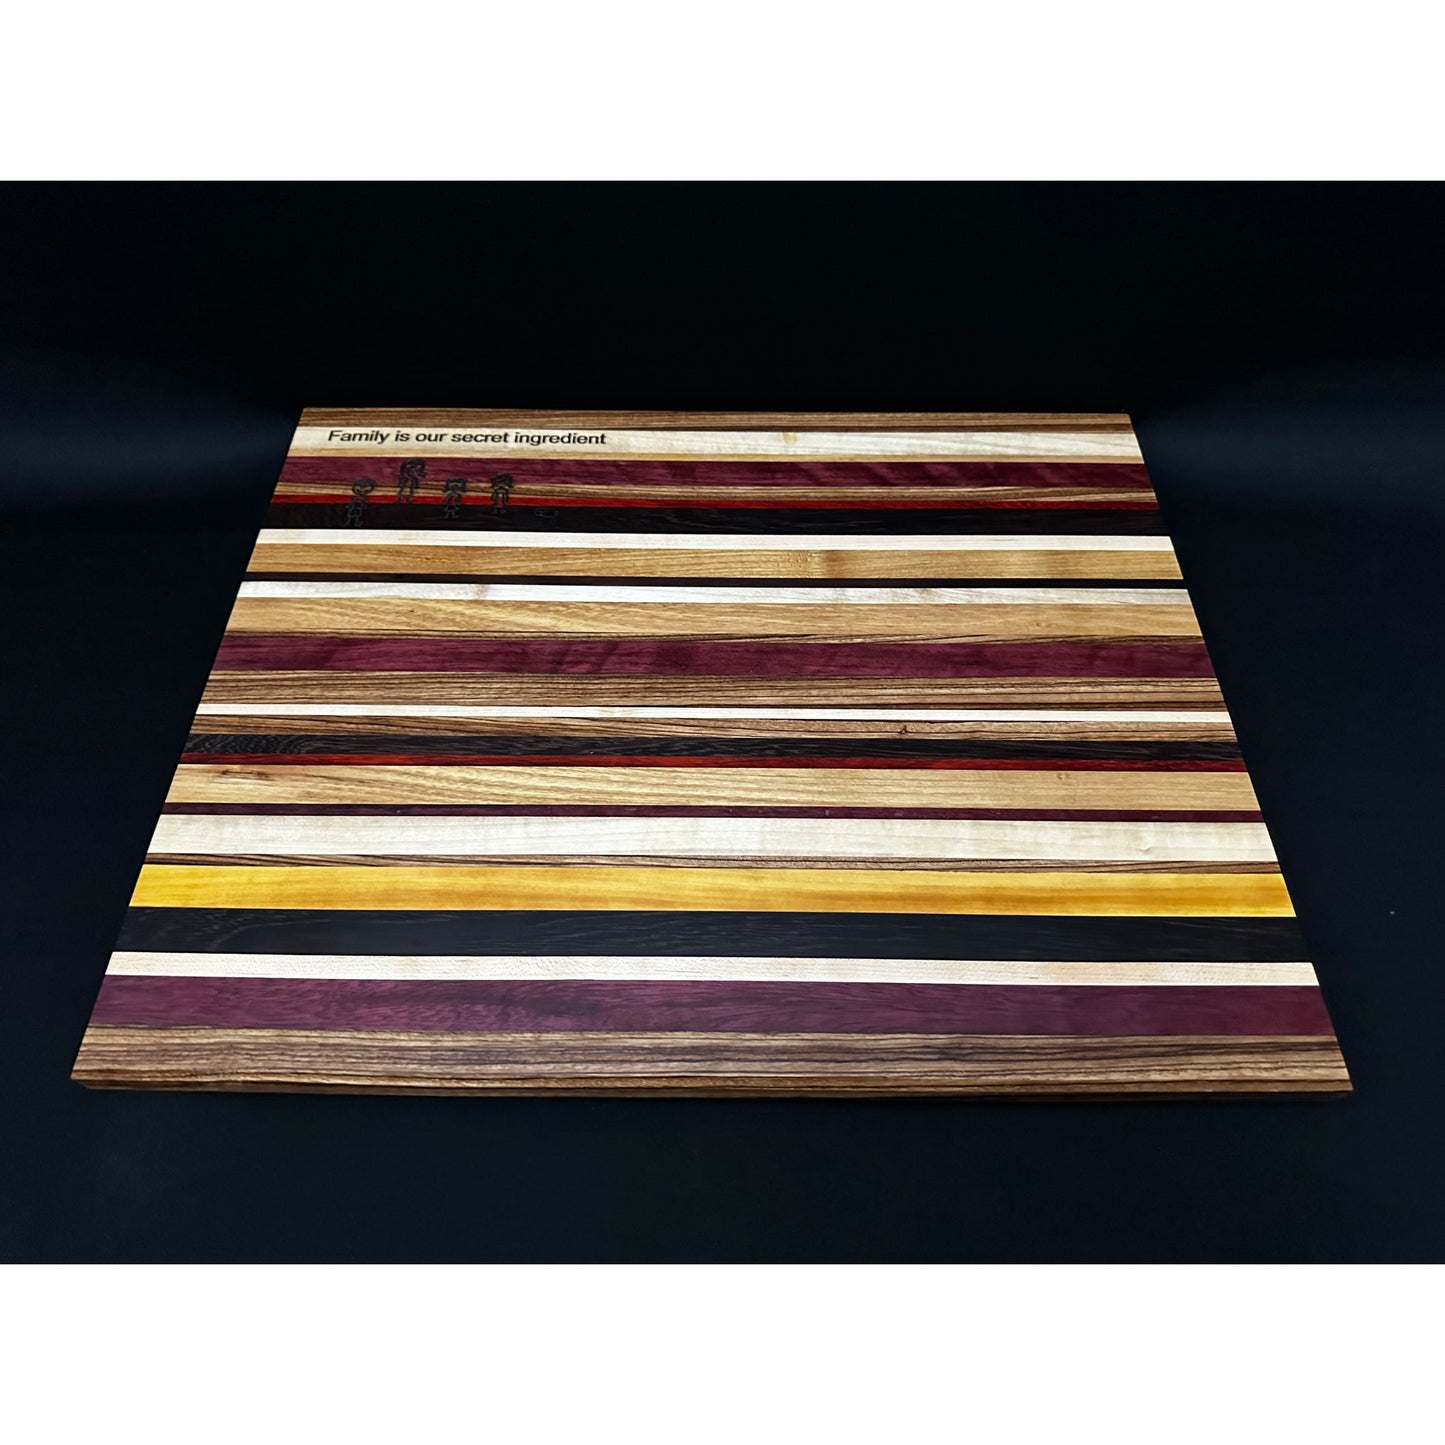 Cutting Board | Serving Tray | Non-slip | Hardwood